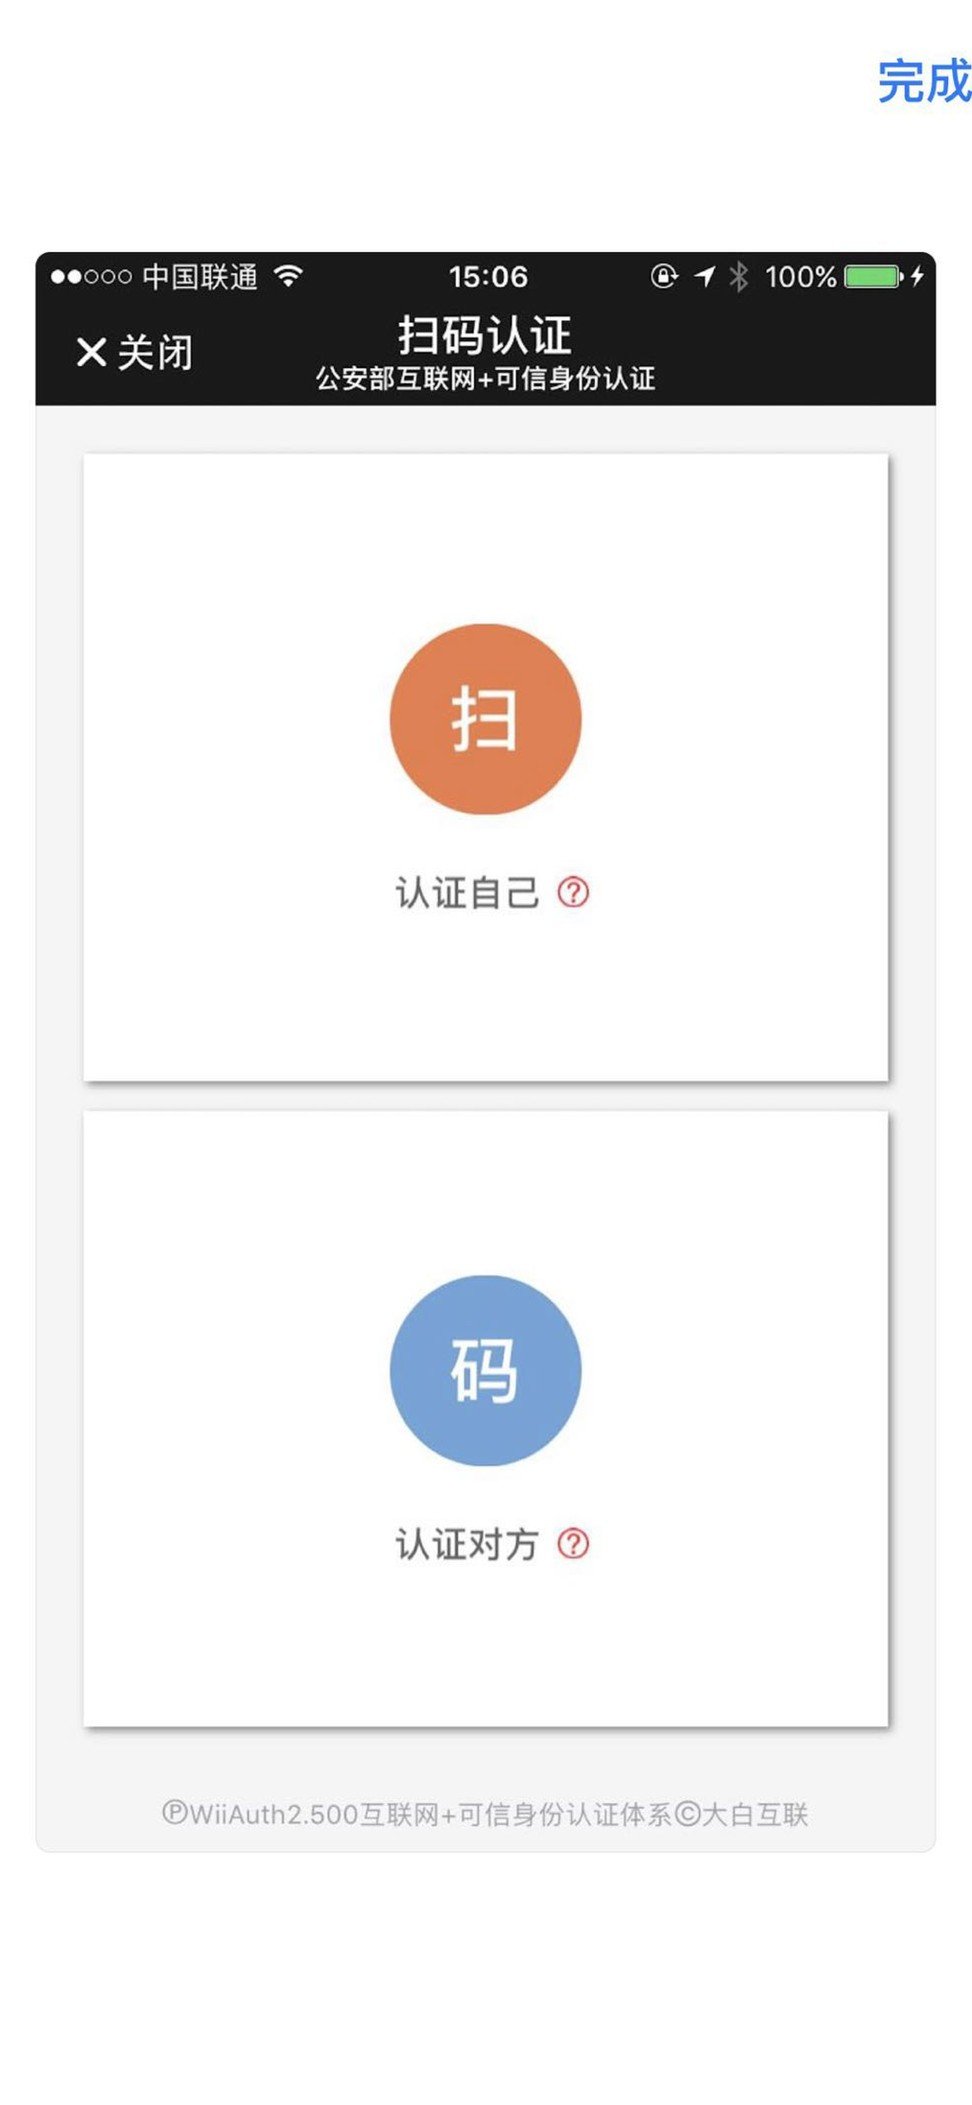 Screenshots of app description of Weijing Authentication in Apple's app store. Photo: HANDOUT